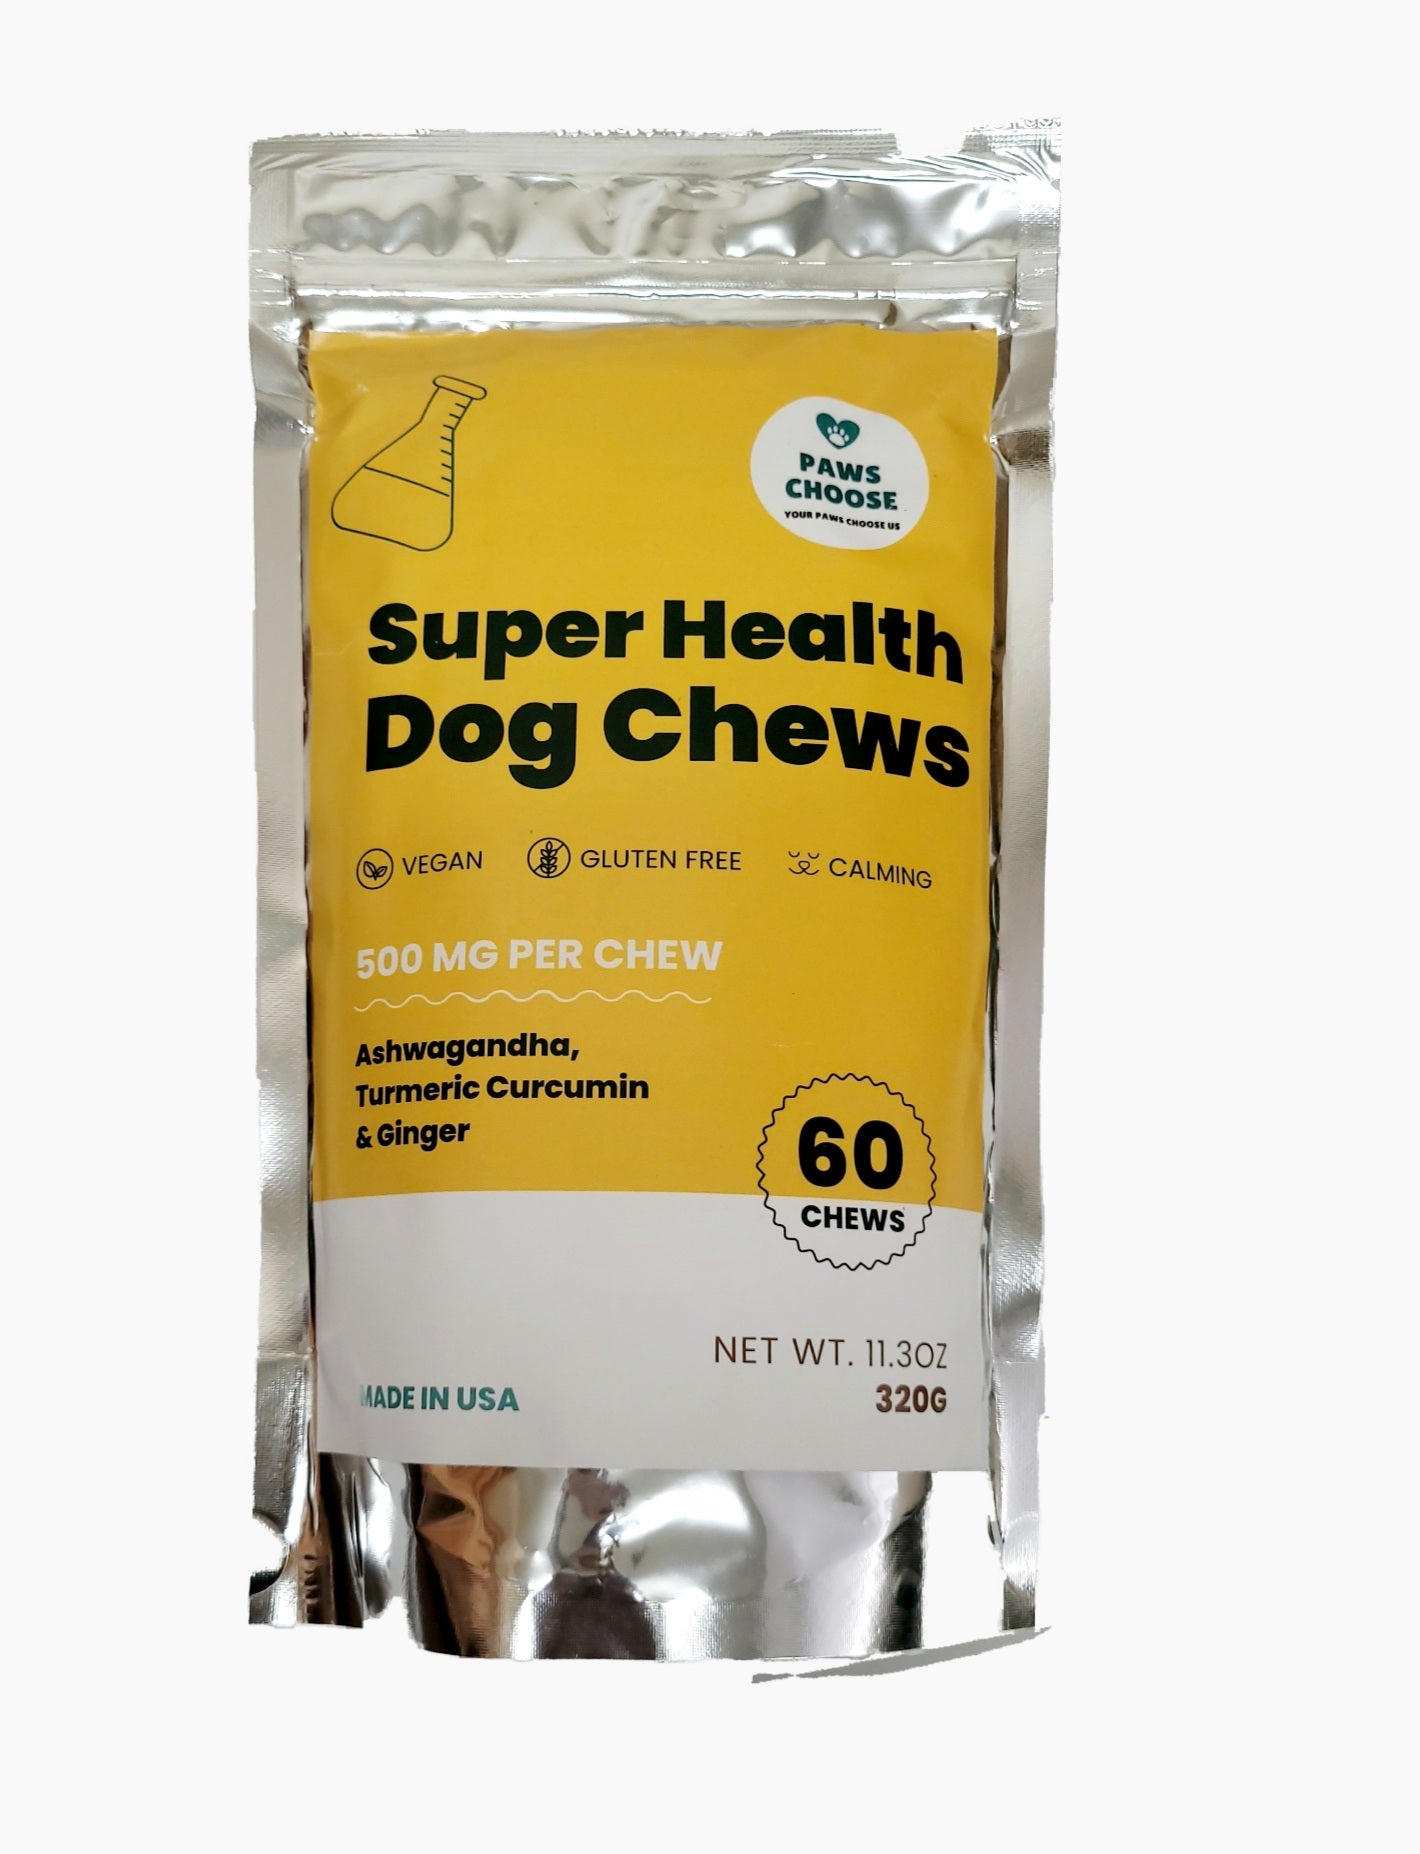 Super Health Dog Chews - Paws Choose Us